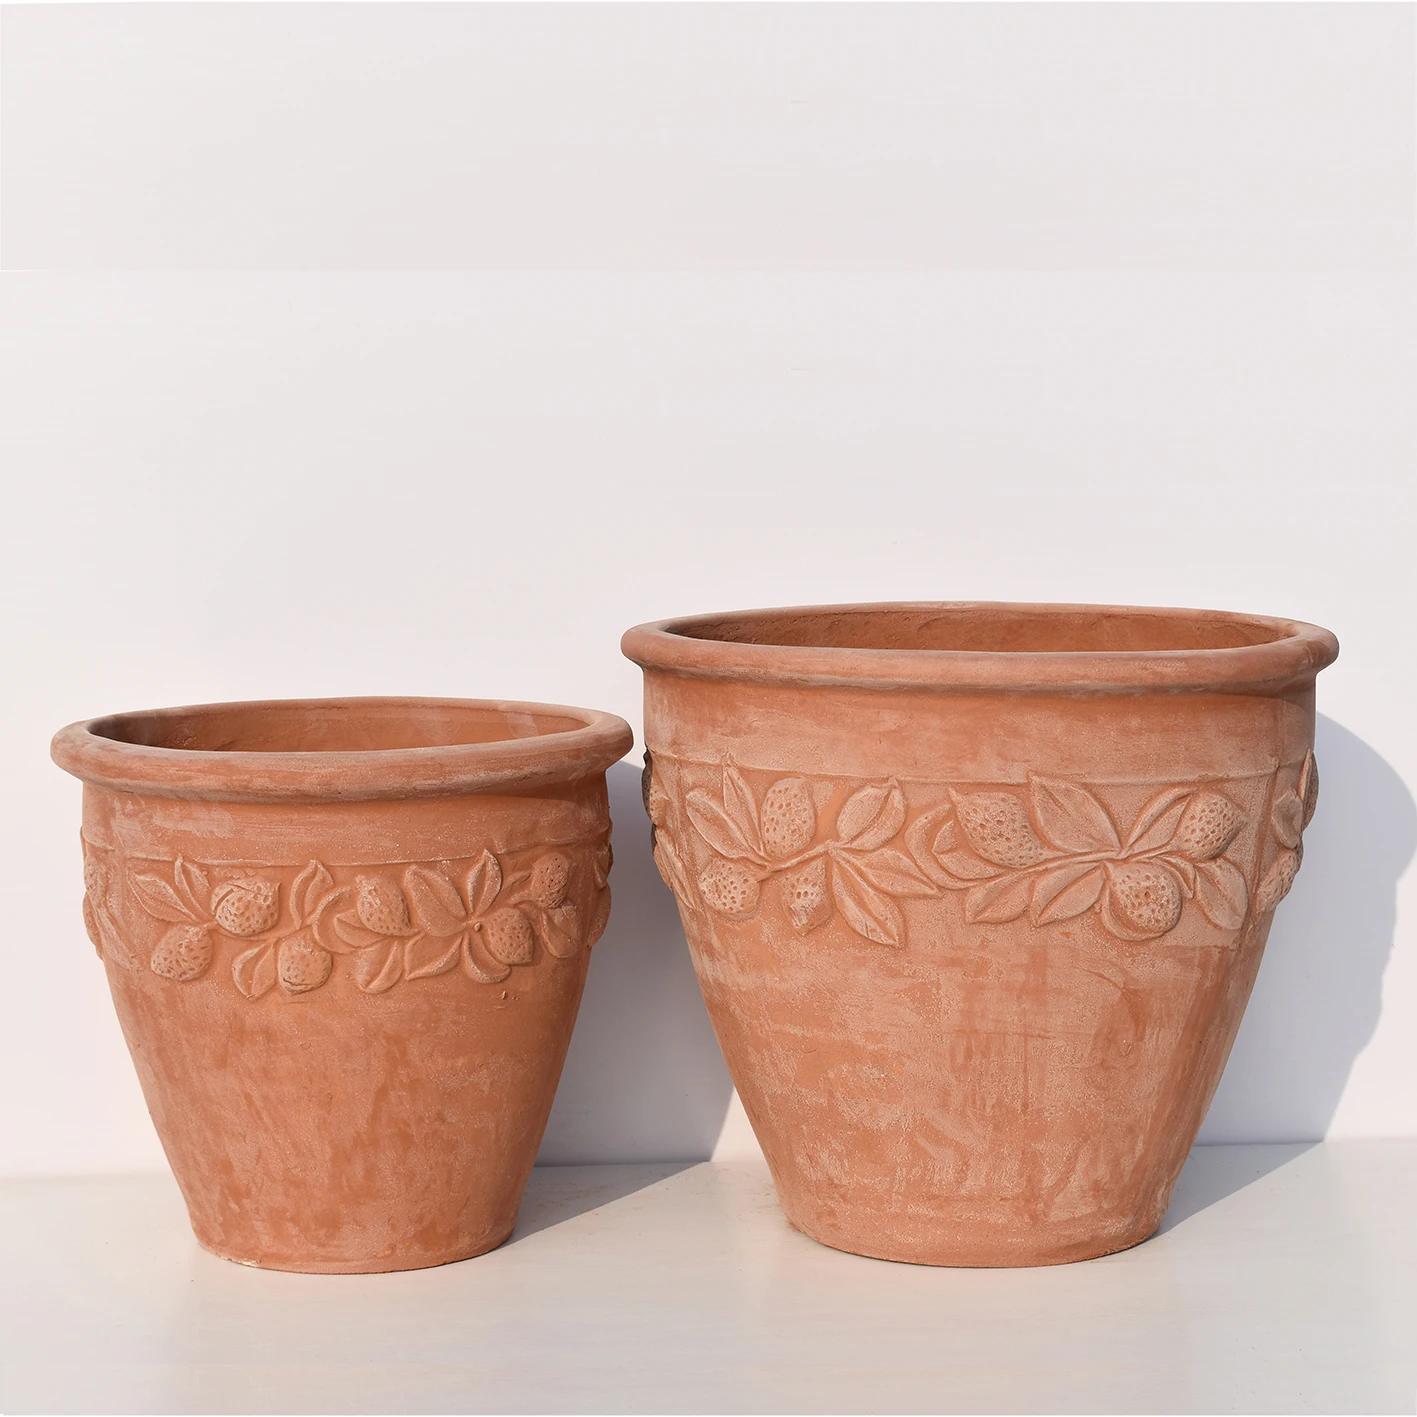 Wholesale Handmade Terracotta Clay Garden Planter Big Ceramic Flower Pot for Indoor and Outdoor Nursery Decoration